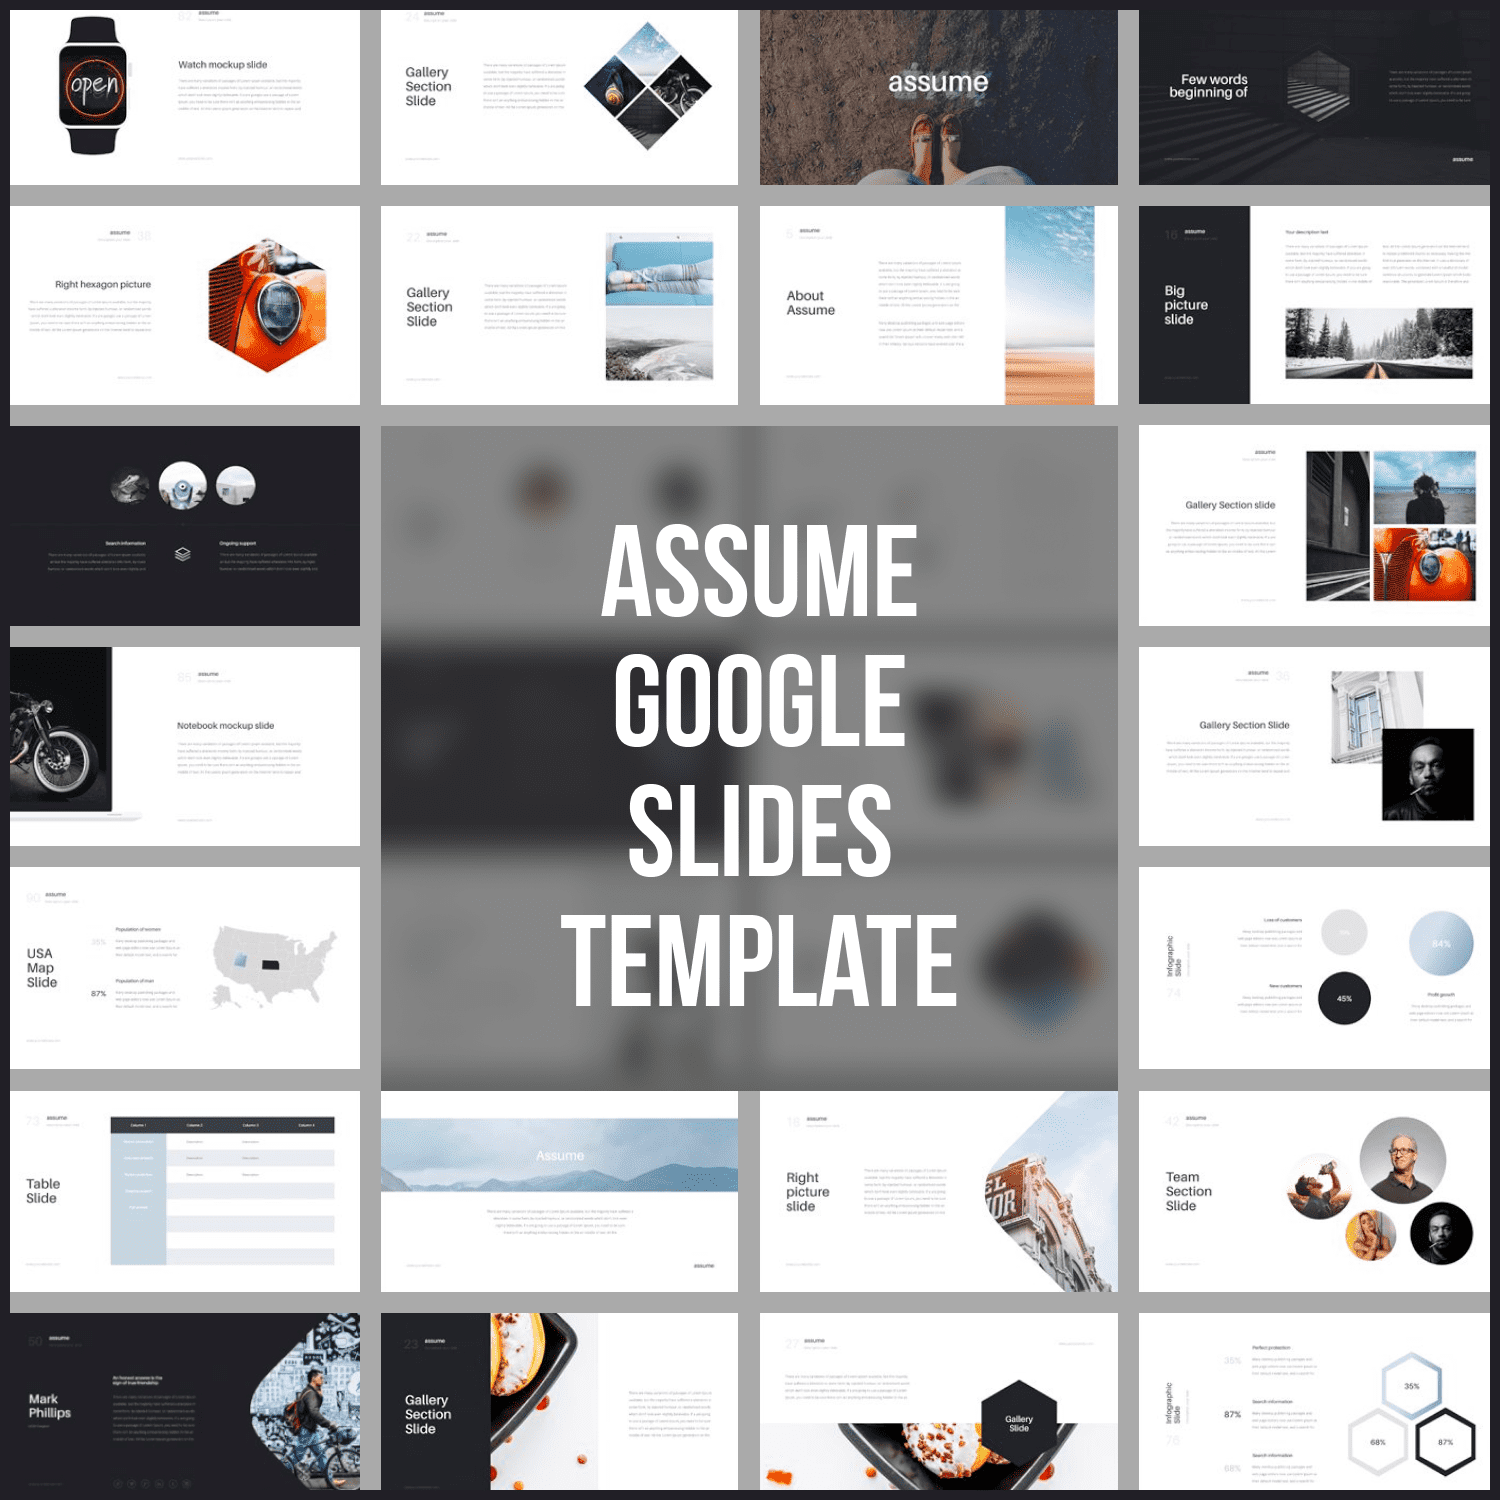 Assume Google Slides Template main cover.